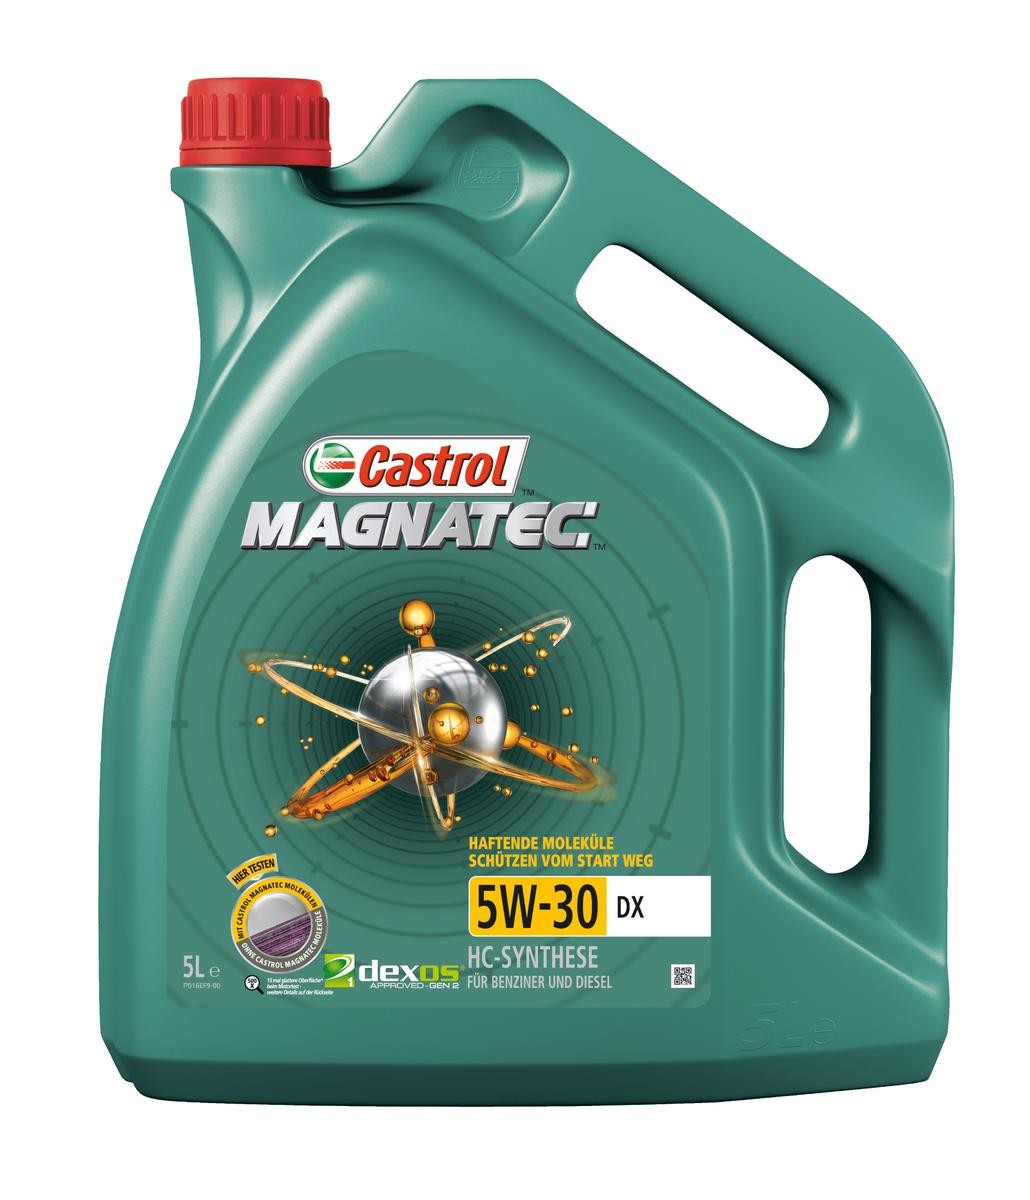 CASTROL Magnatec, DX 15C323 Motorový olej 5W30, Obsah 5l